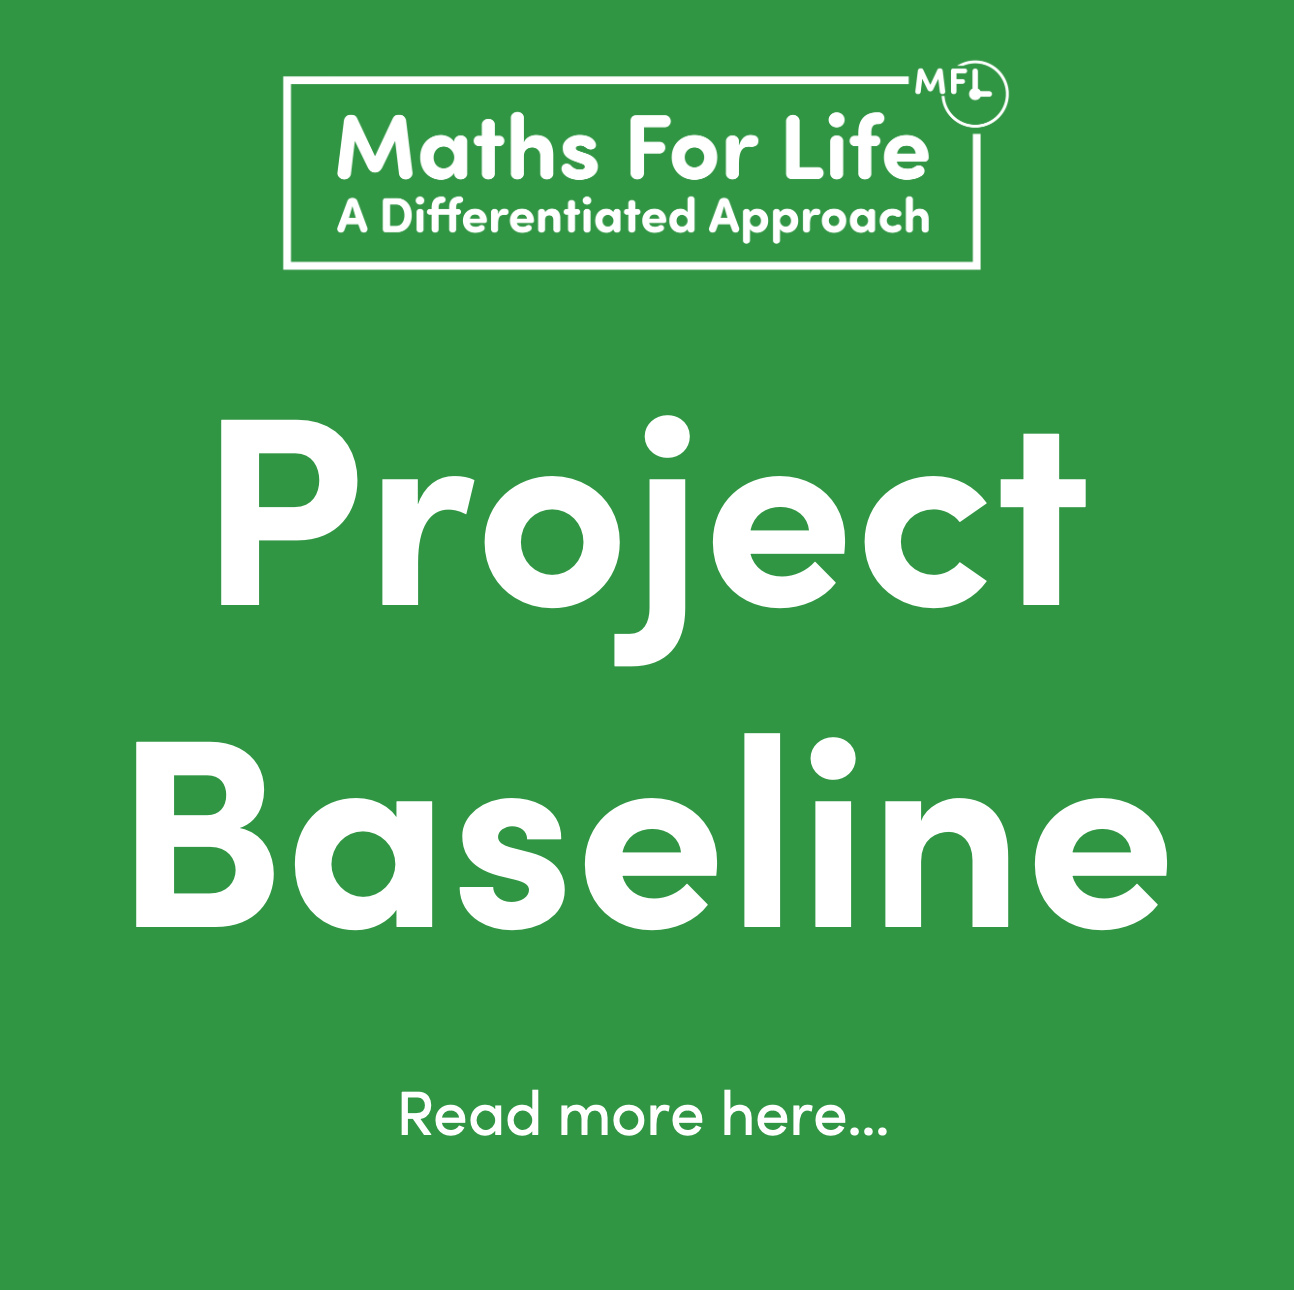 Take part in Project Baseline